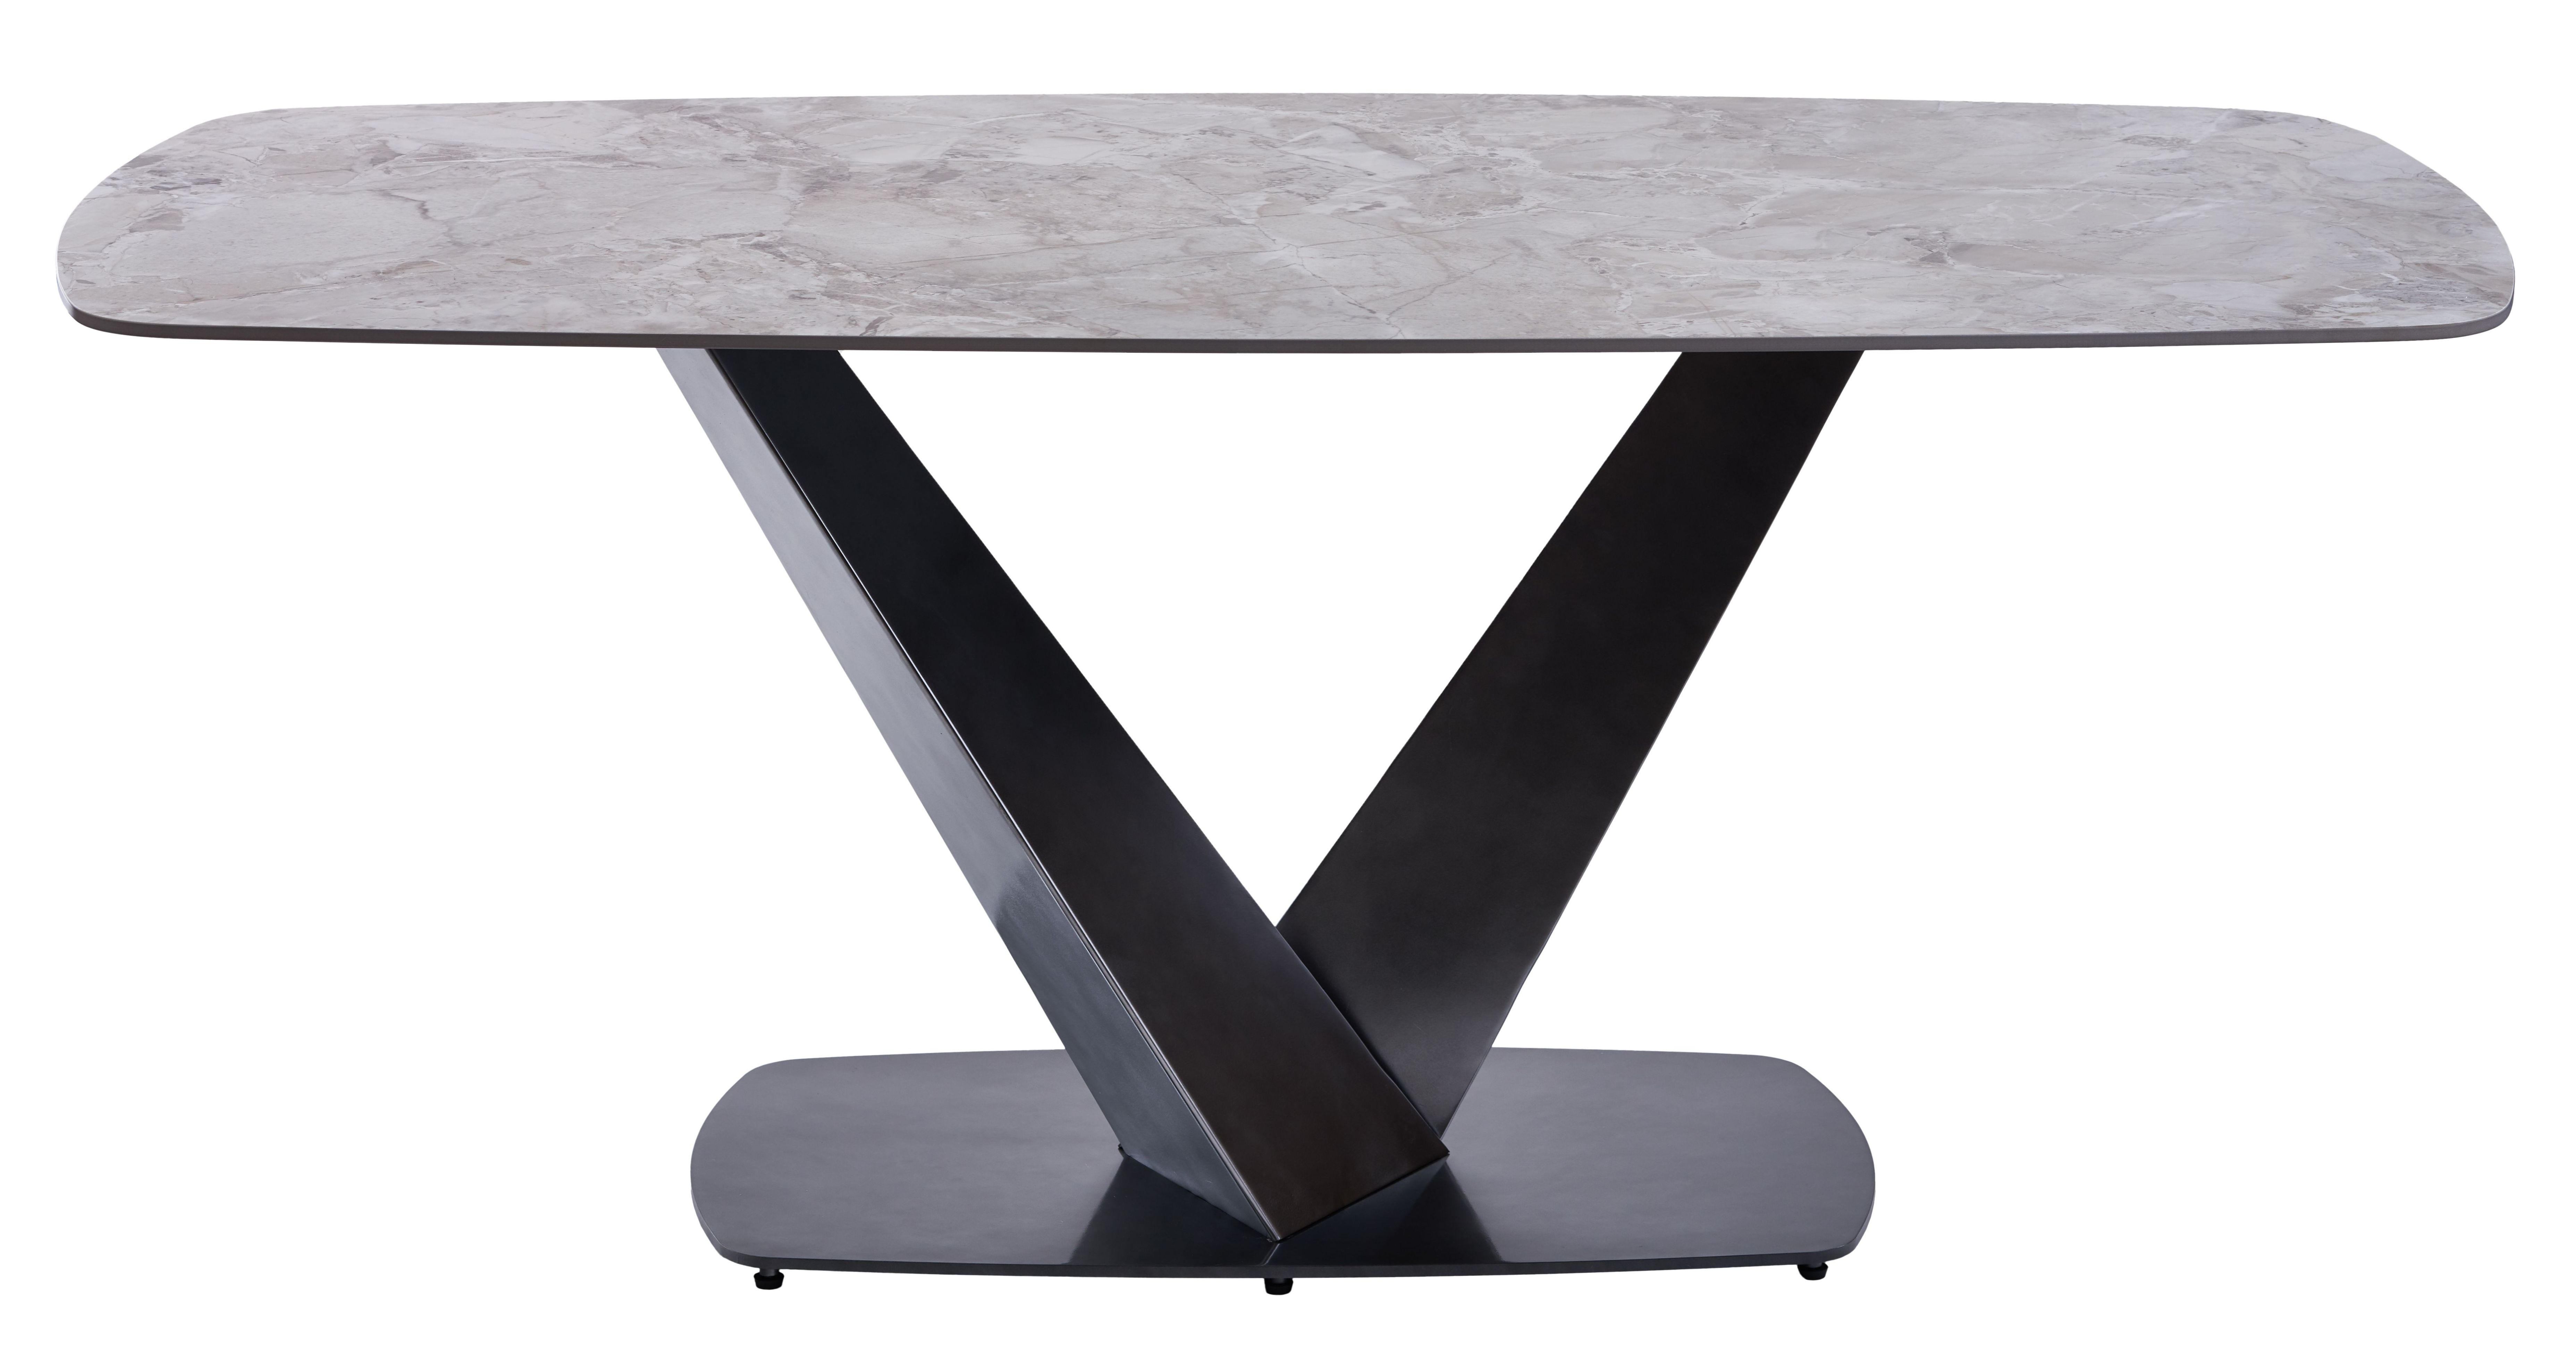 Marvel Grey Stone стол обеденный керамика 180x90 см Concepto